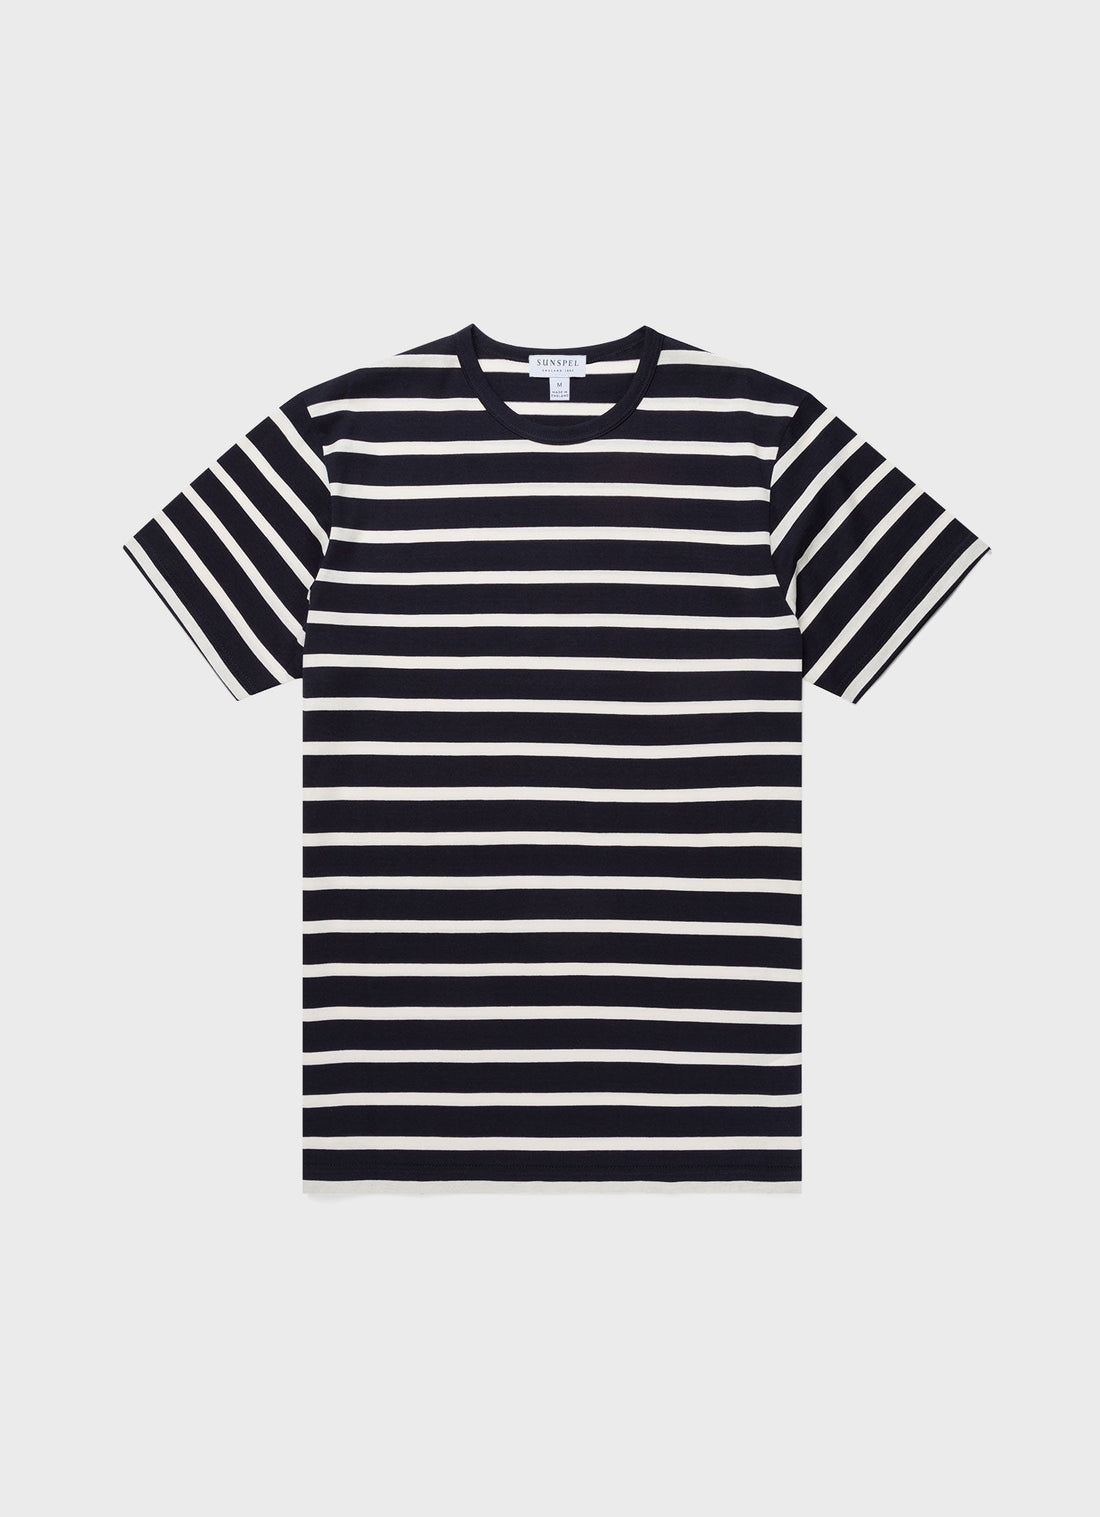 Men's Classic T-shirt in Navy/Ecru Breton Stripe